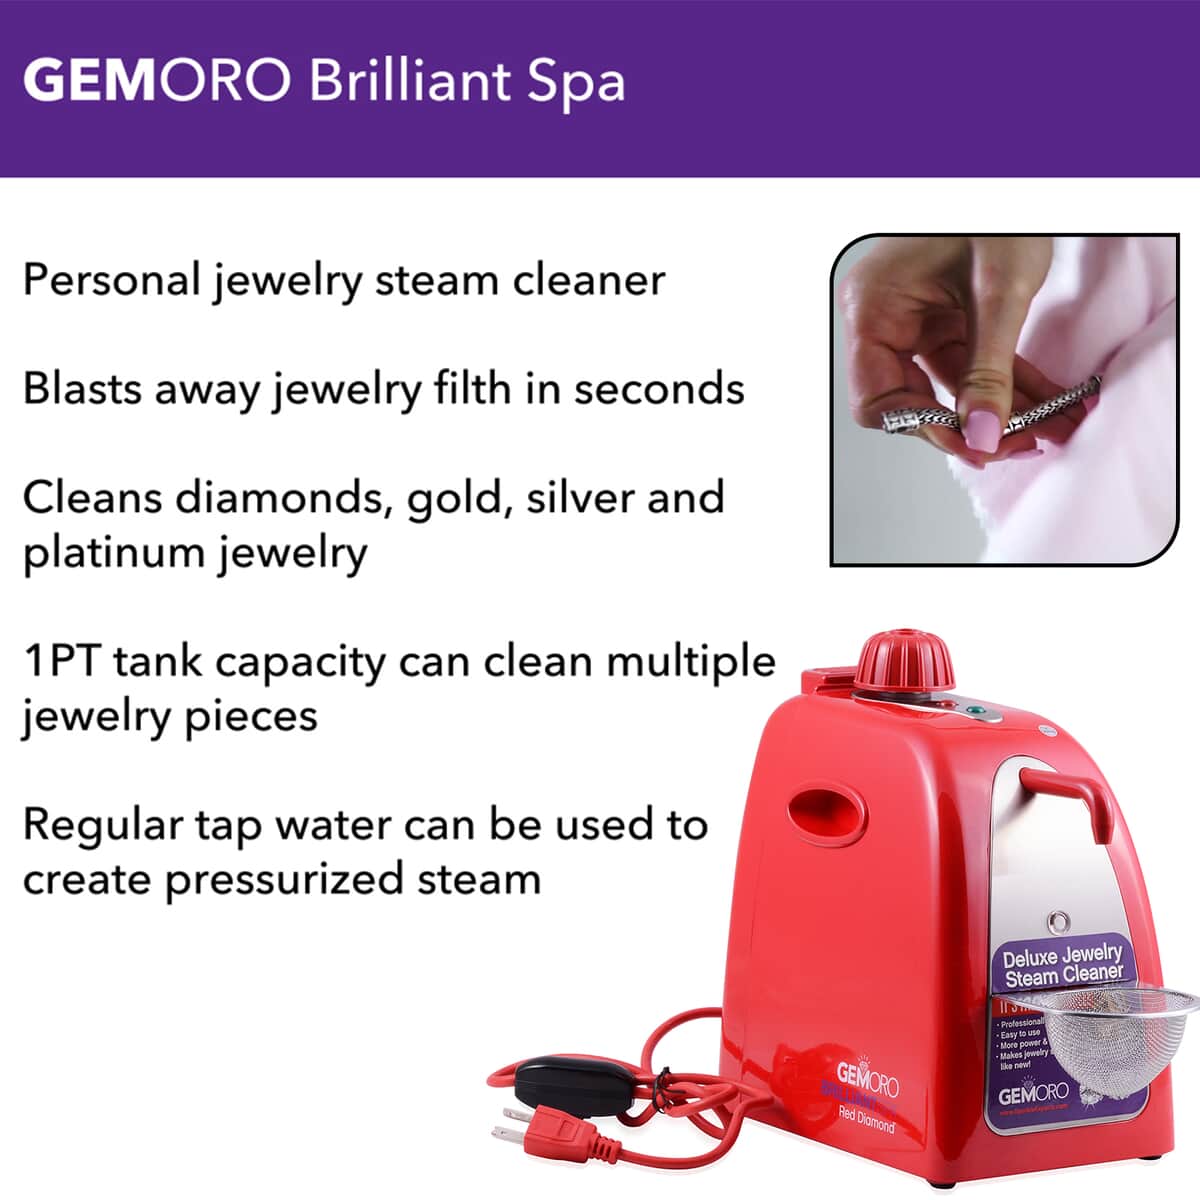 Buy GEMORO Brilliant Spa Black Diamond: Deluxe Personal Jewelry Steam  Cleaner at ShopLC.